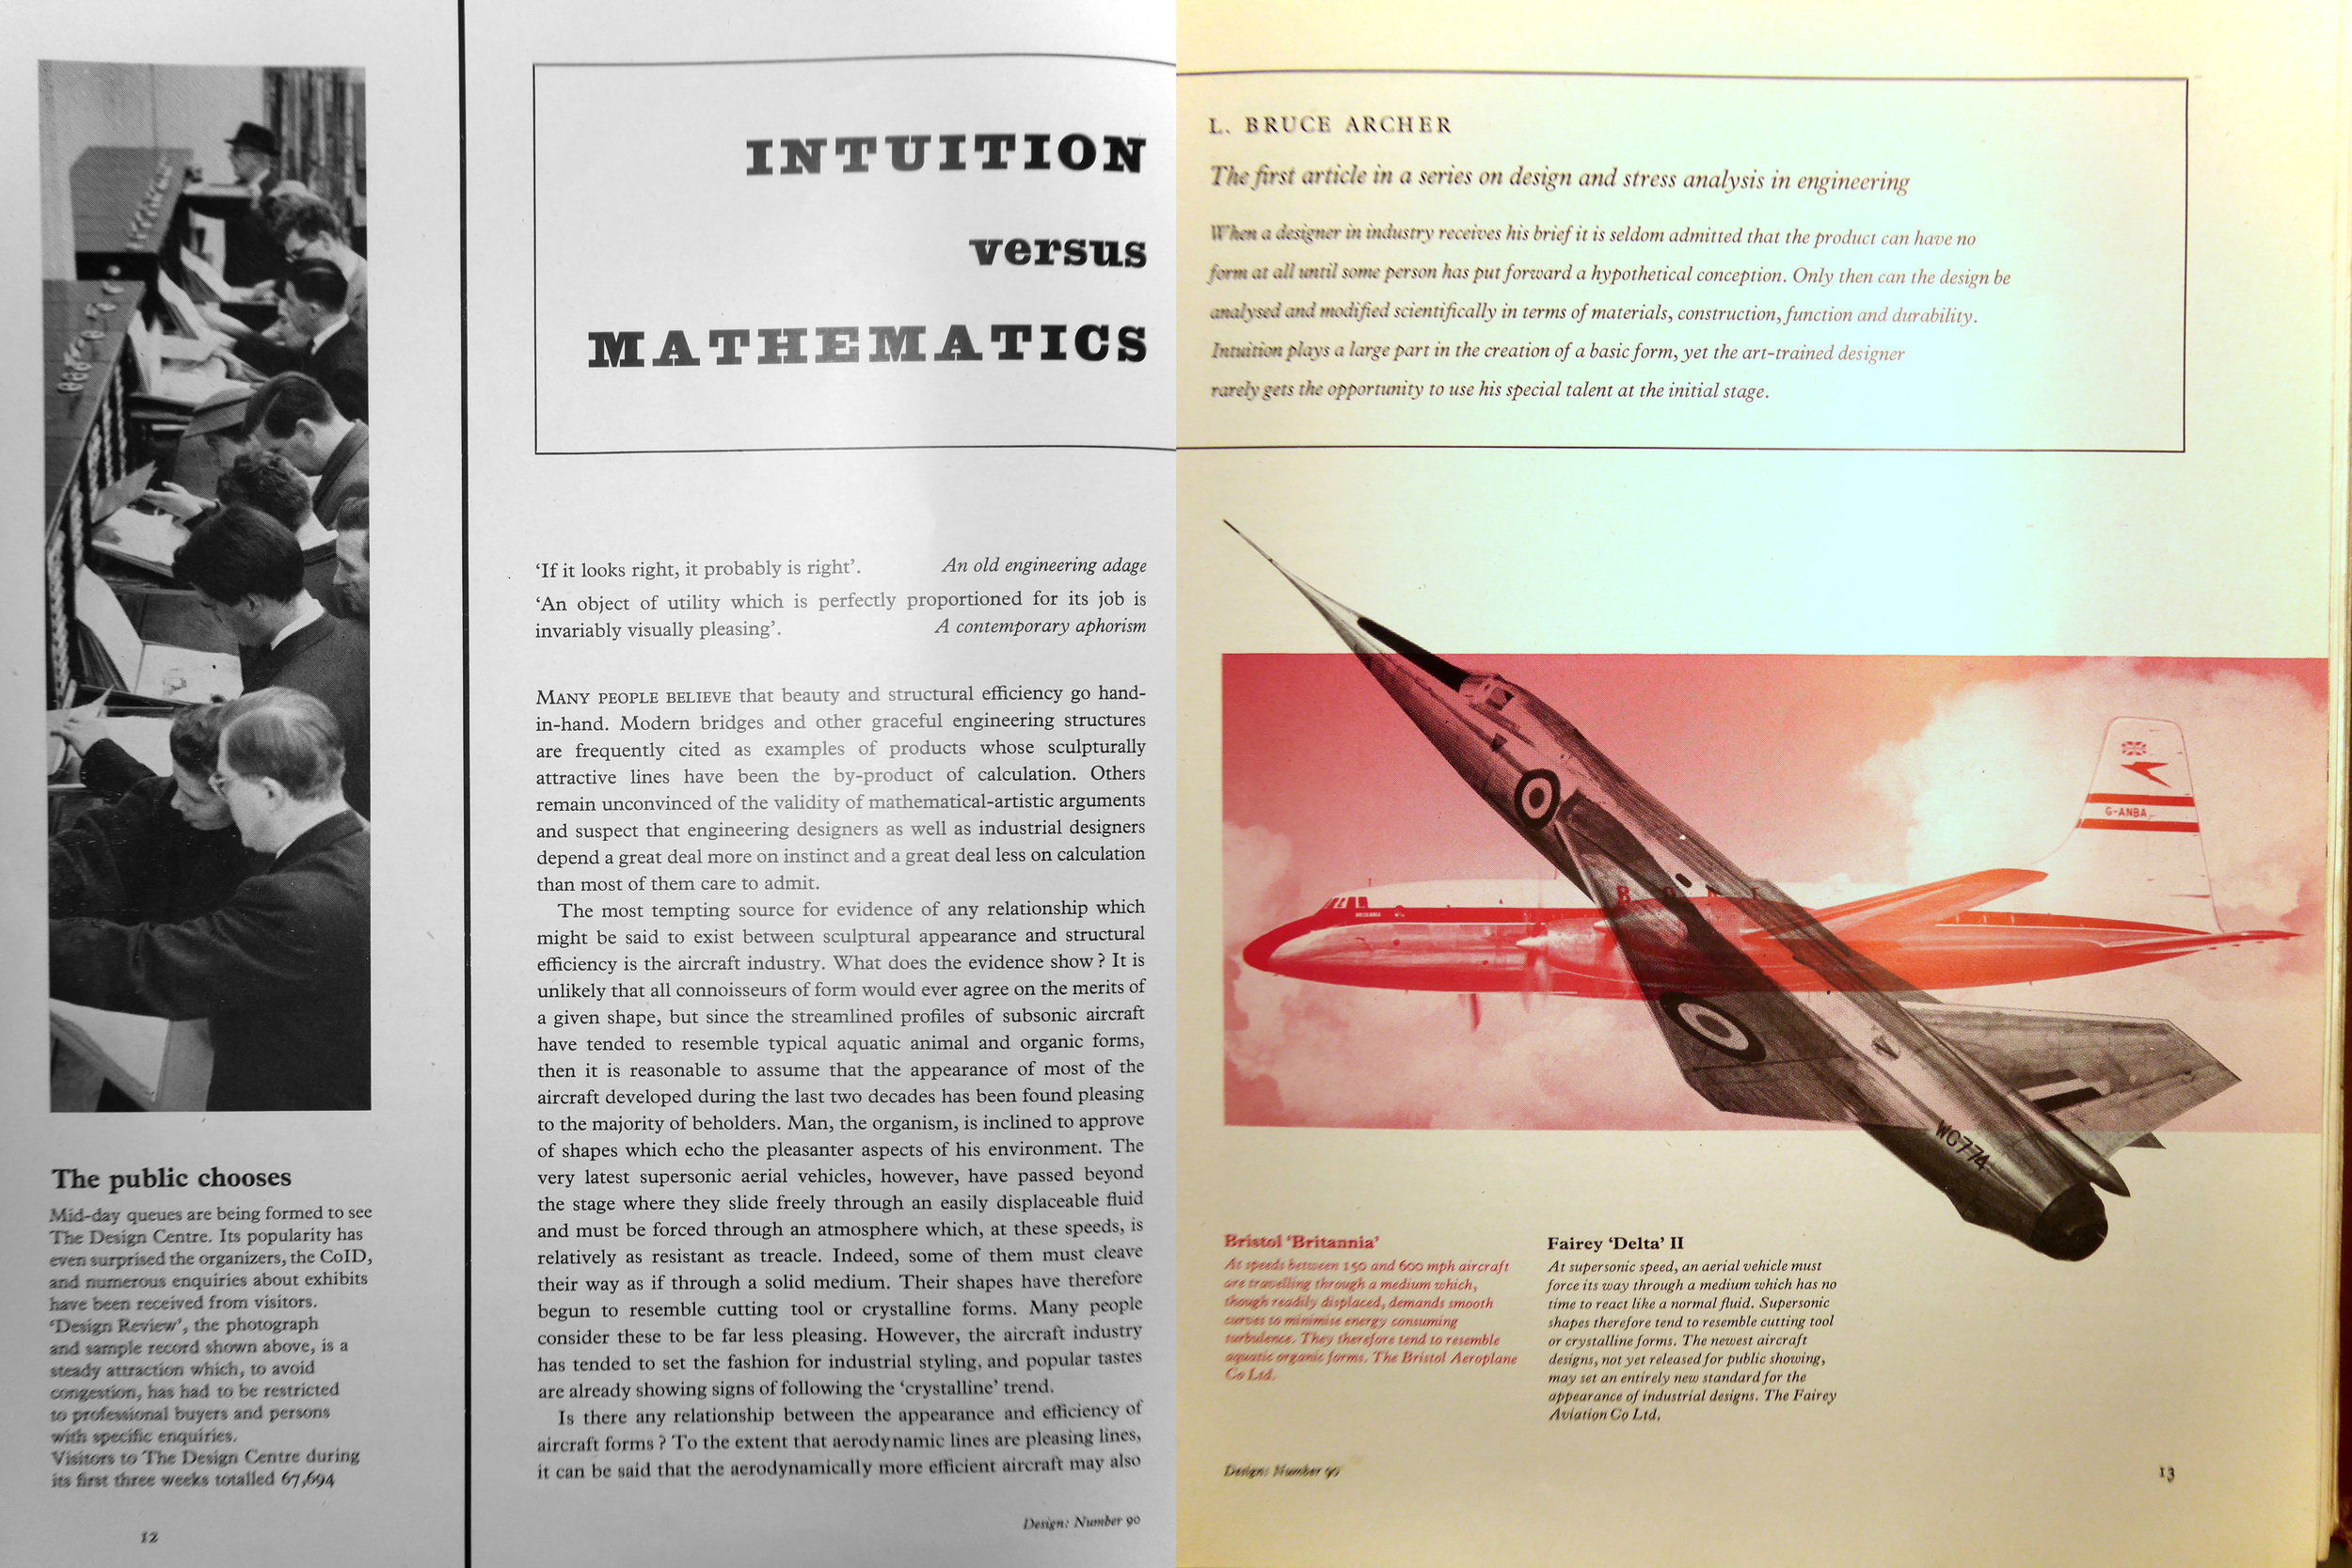 DDR_Intuition-versus-Mathematics_June_1956.jpg